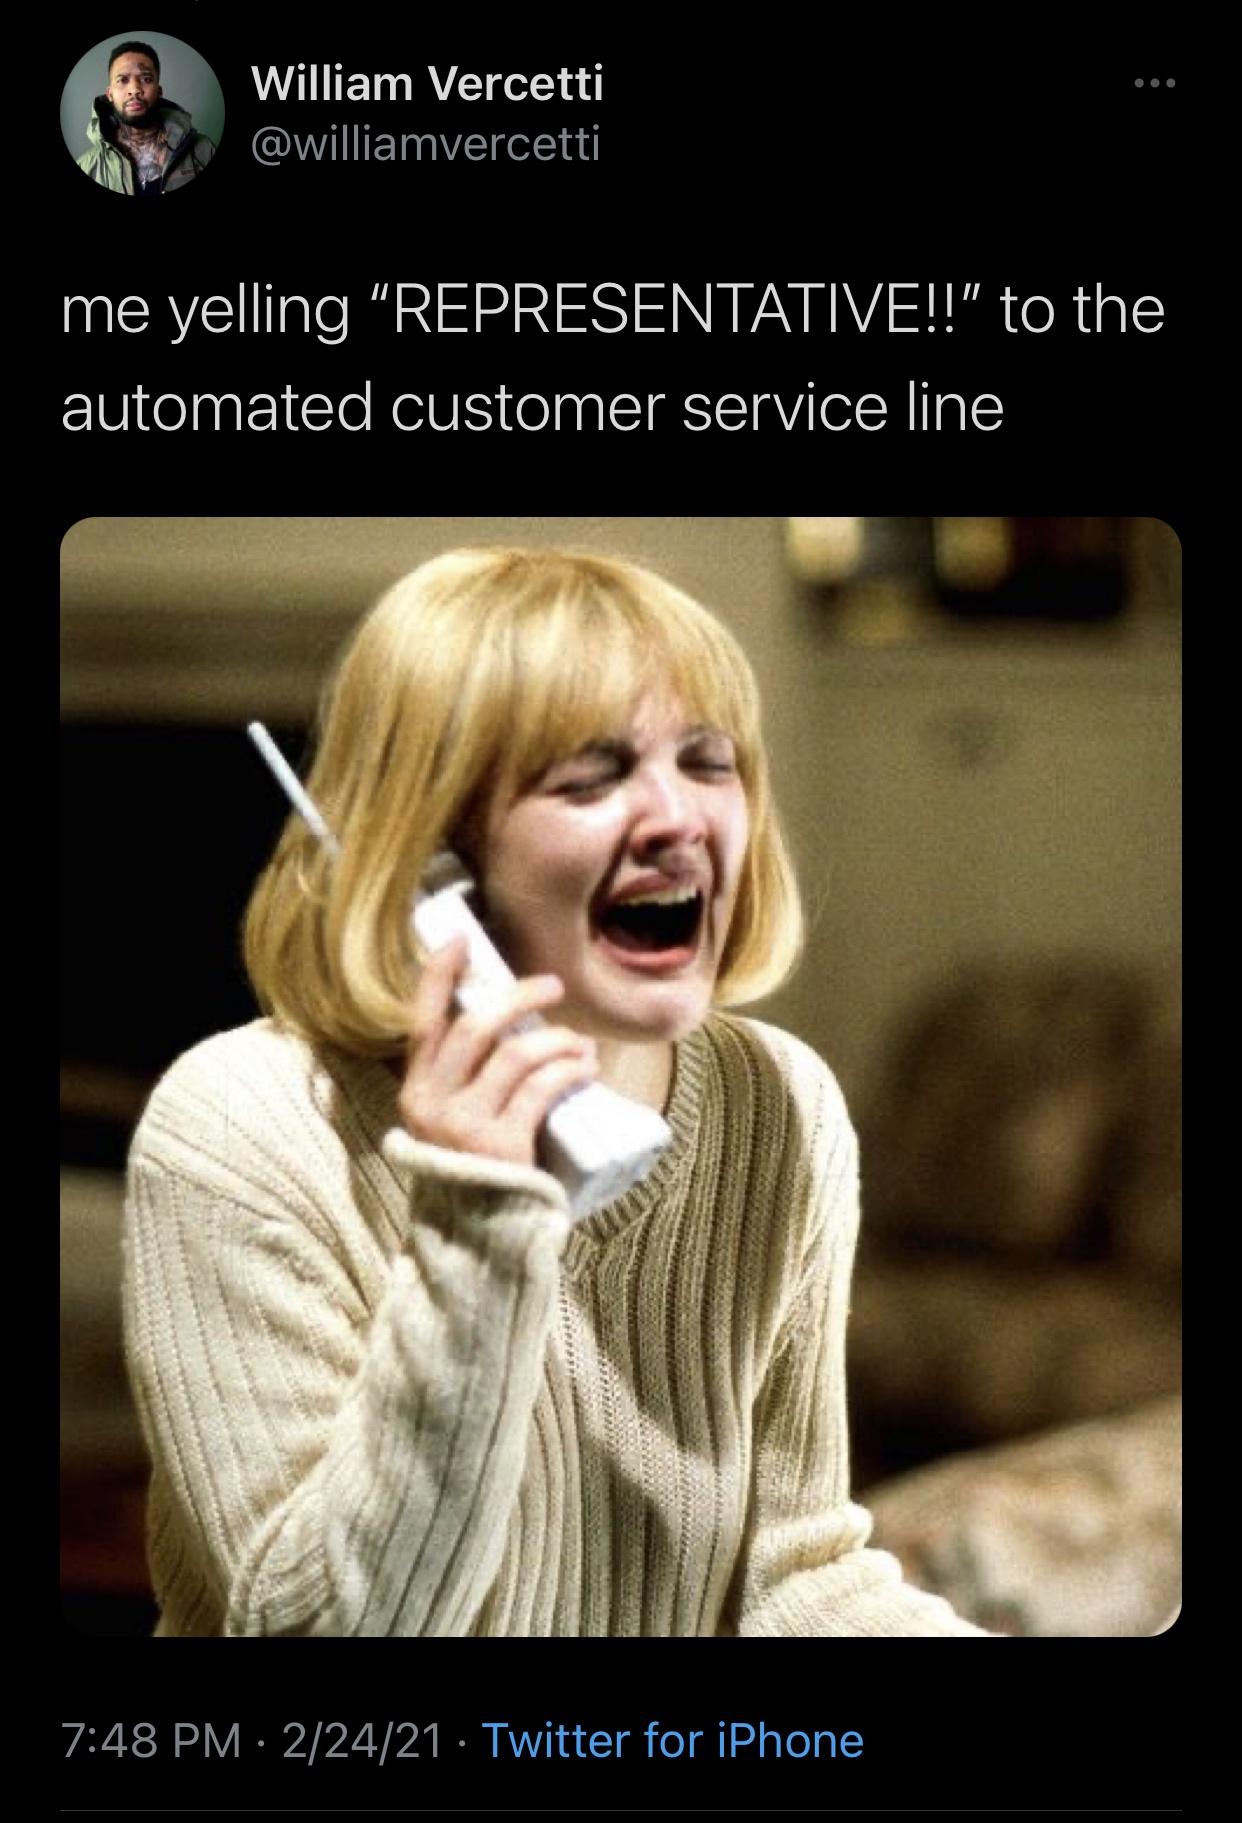 movie scream - William Vercetti me yelling Representative!!" to the automated customer service line 22421 Twitter for iPhone